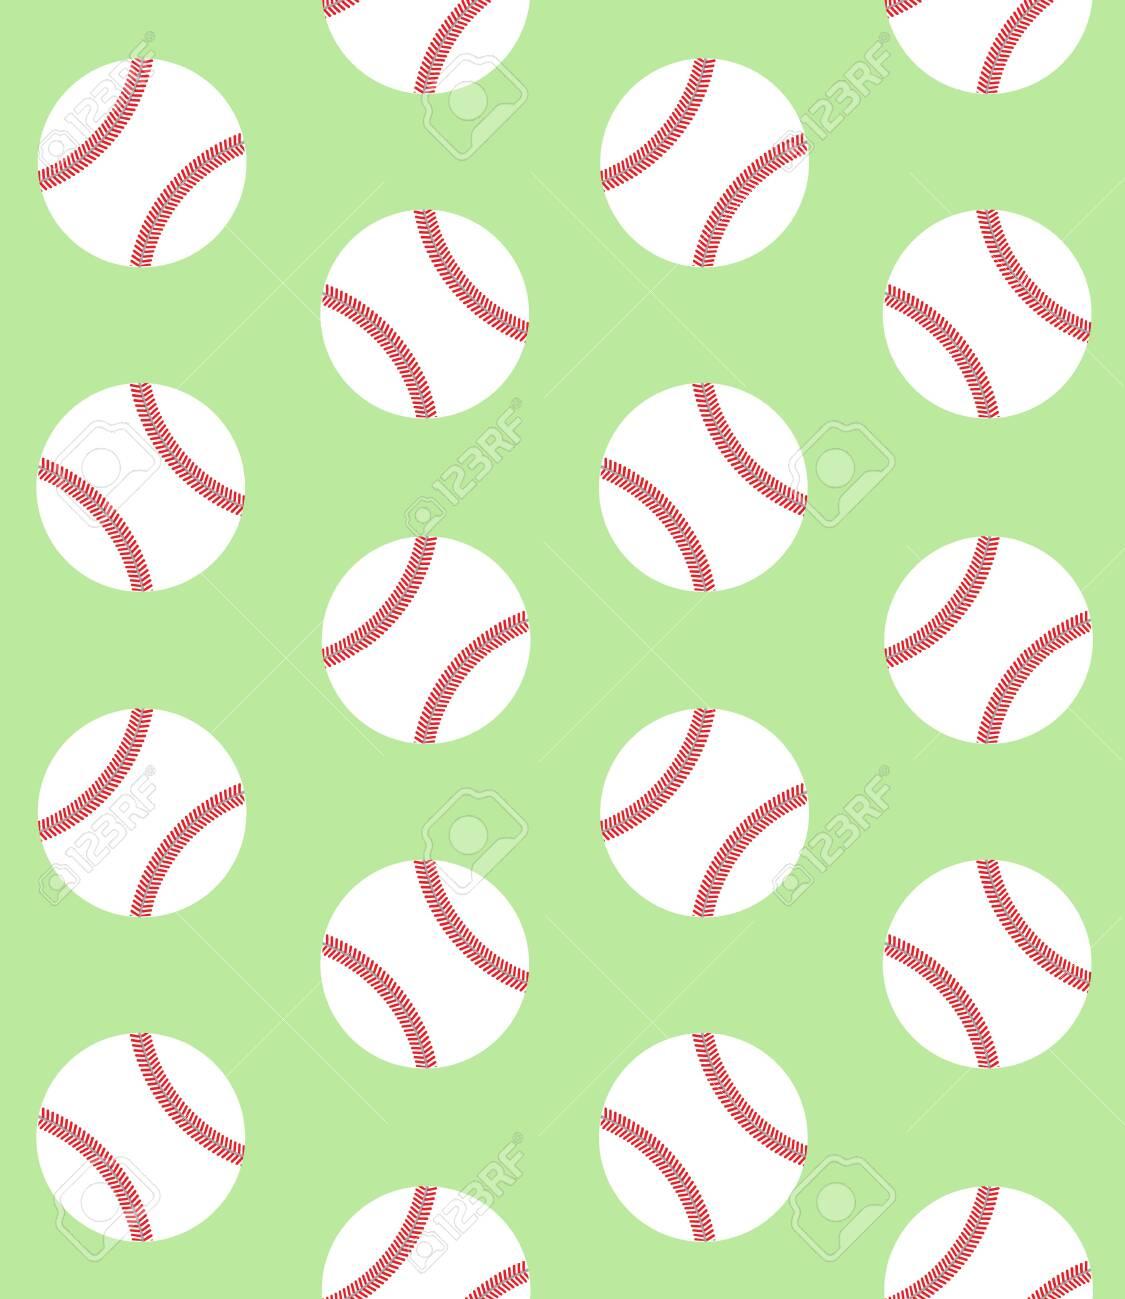 Free download Vector Seamless Pattern Of Flat Cartoon Baseball